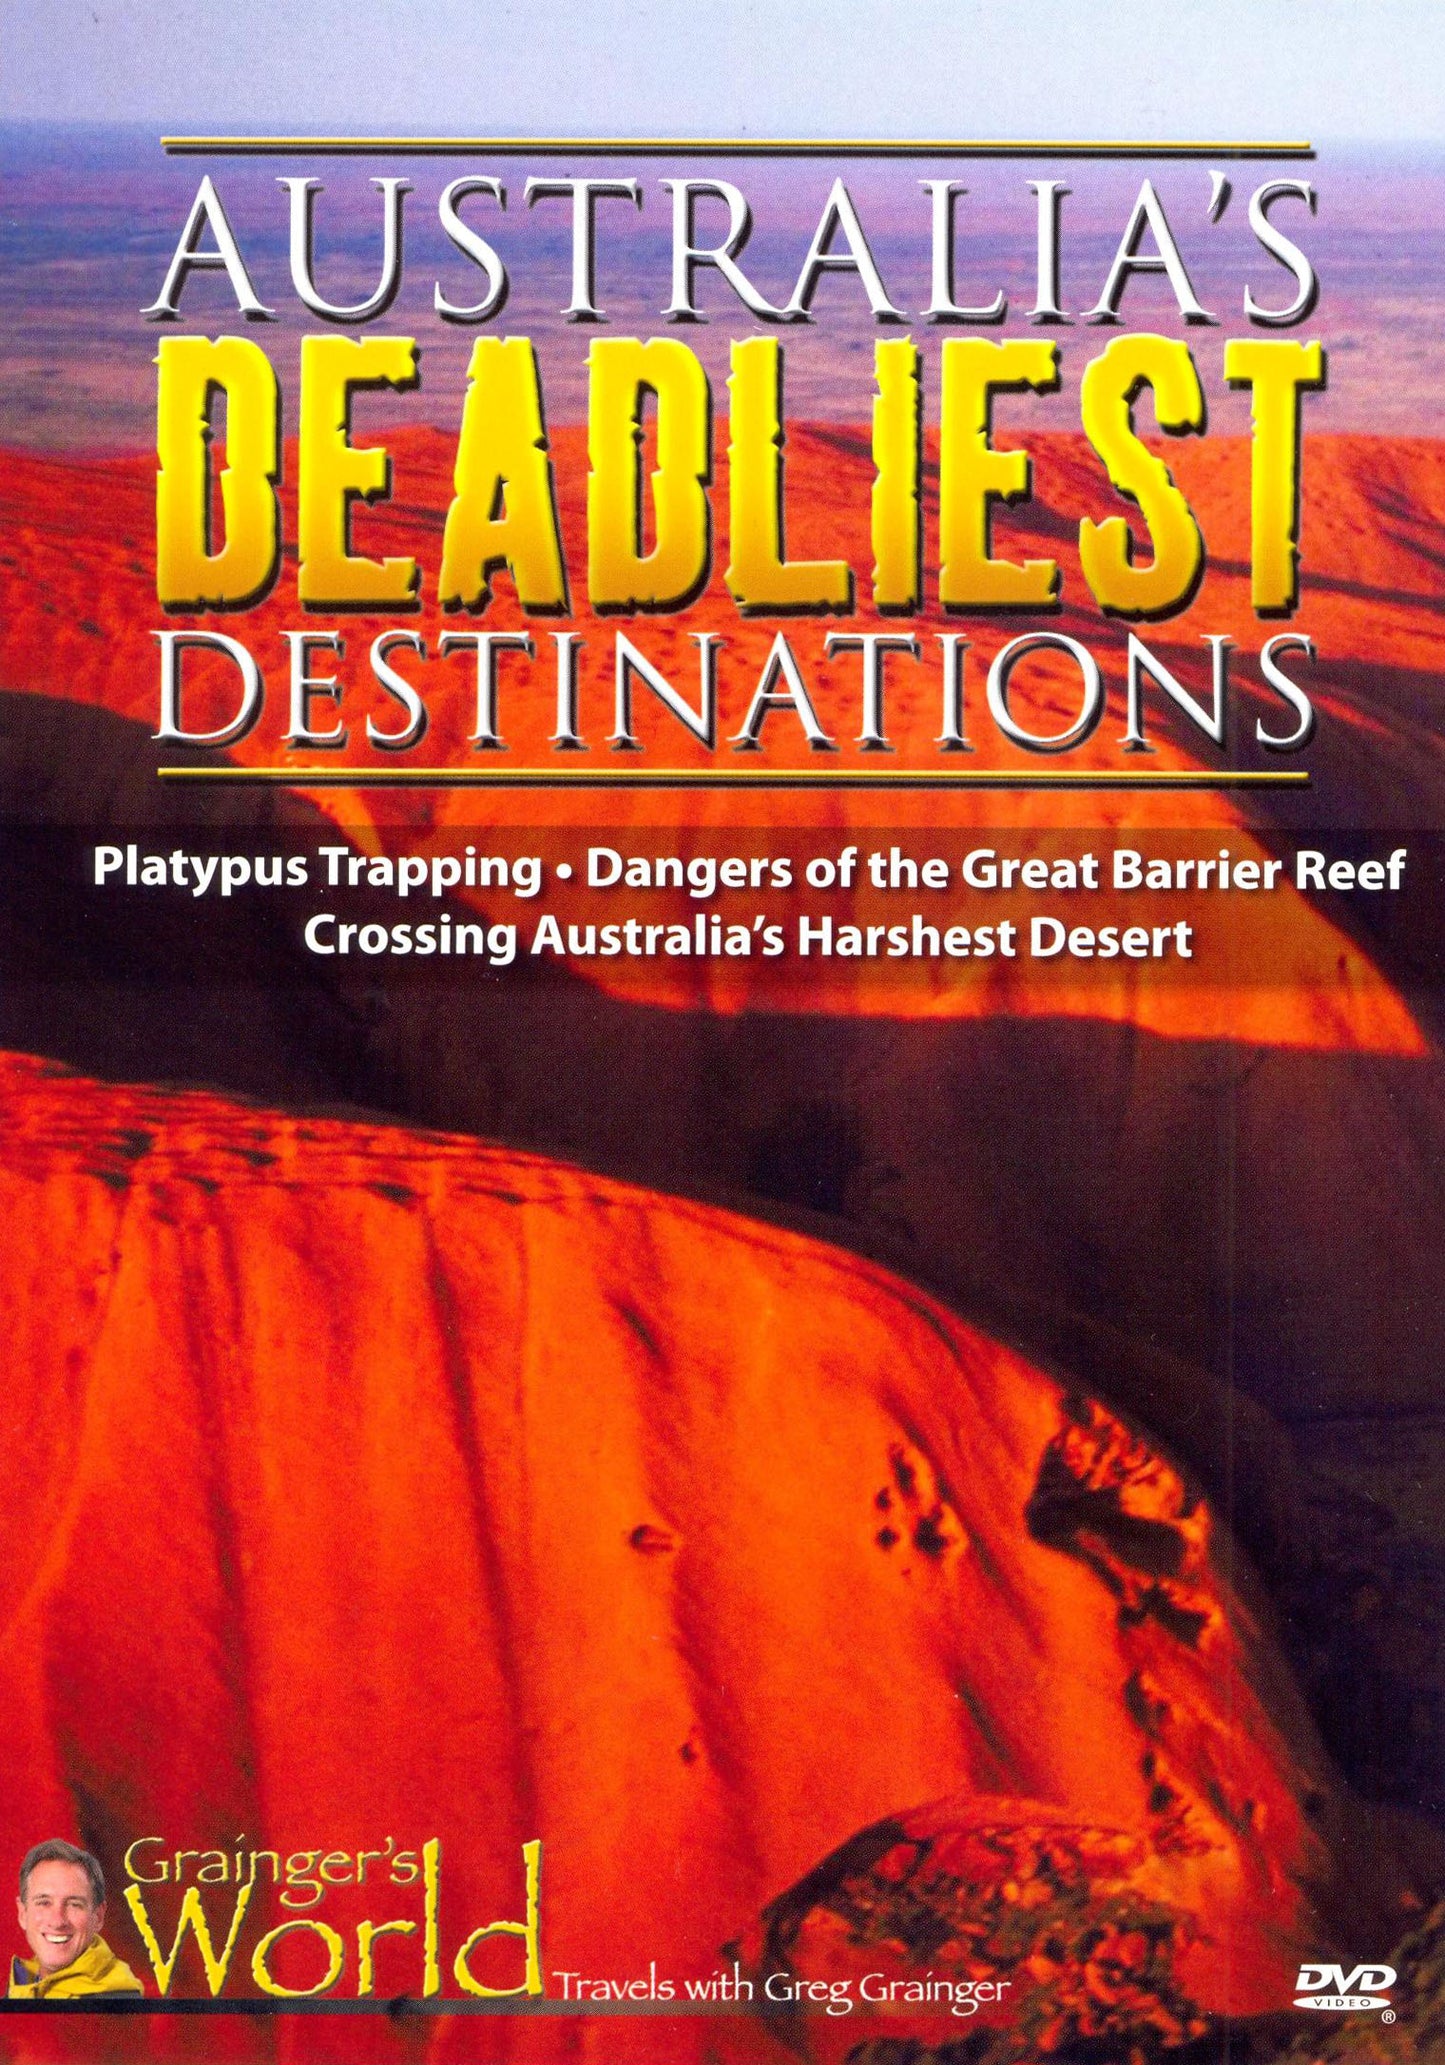 Australia's Deadliest Destinations, Vol. 3 cover art